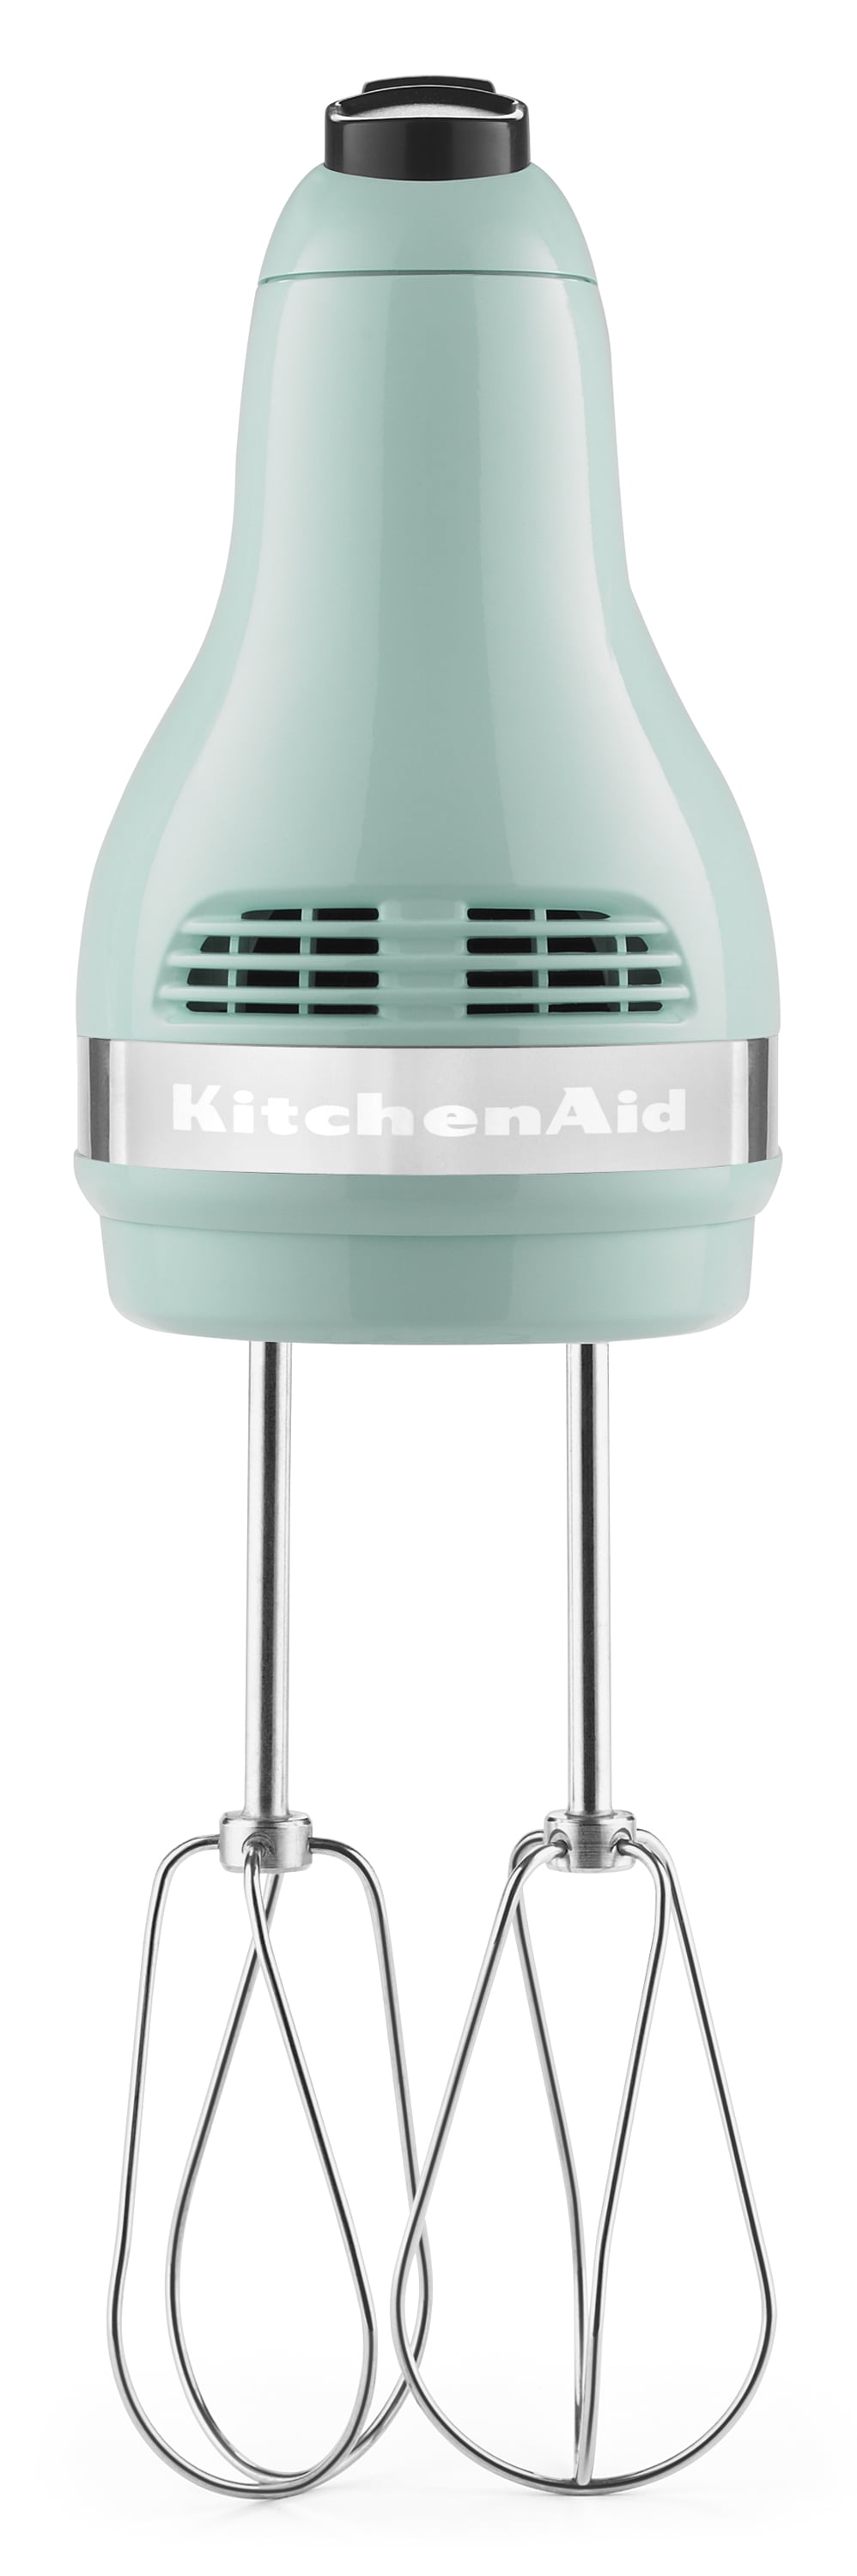  KitchenAid KHM512WH 5-Speed Ultra Power Hand Mixer, White,  8x7x5: Home & Kitchen